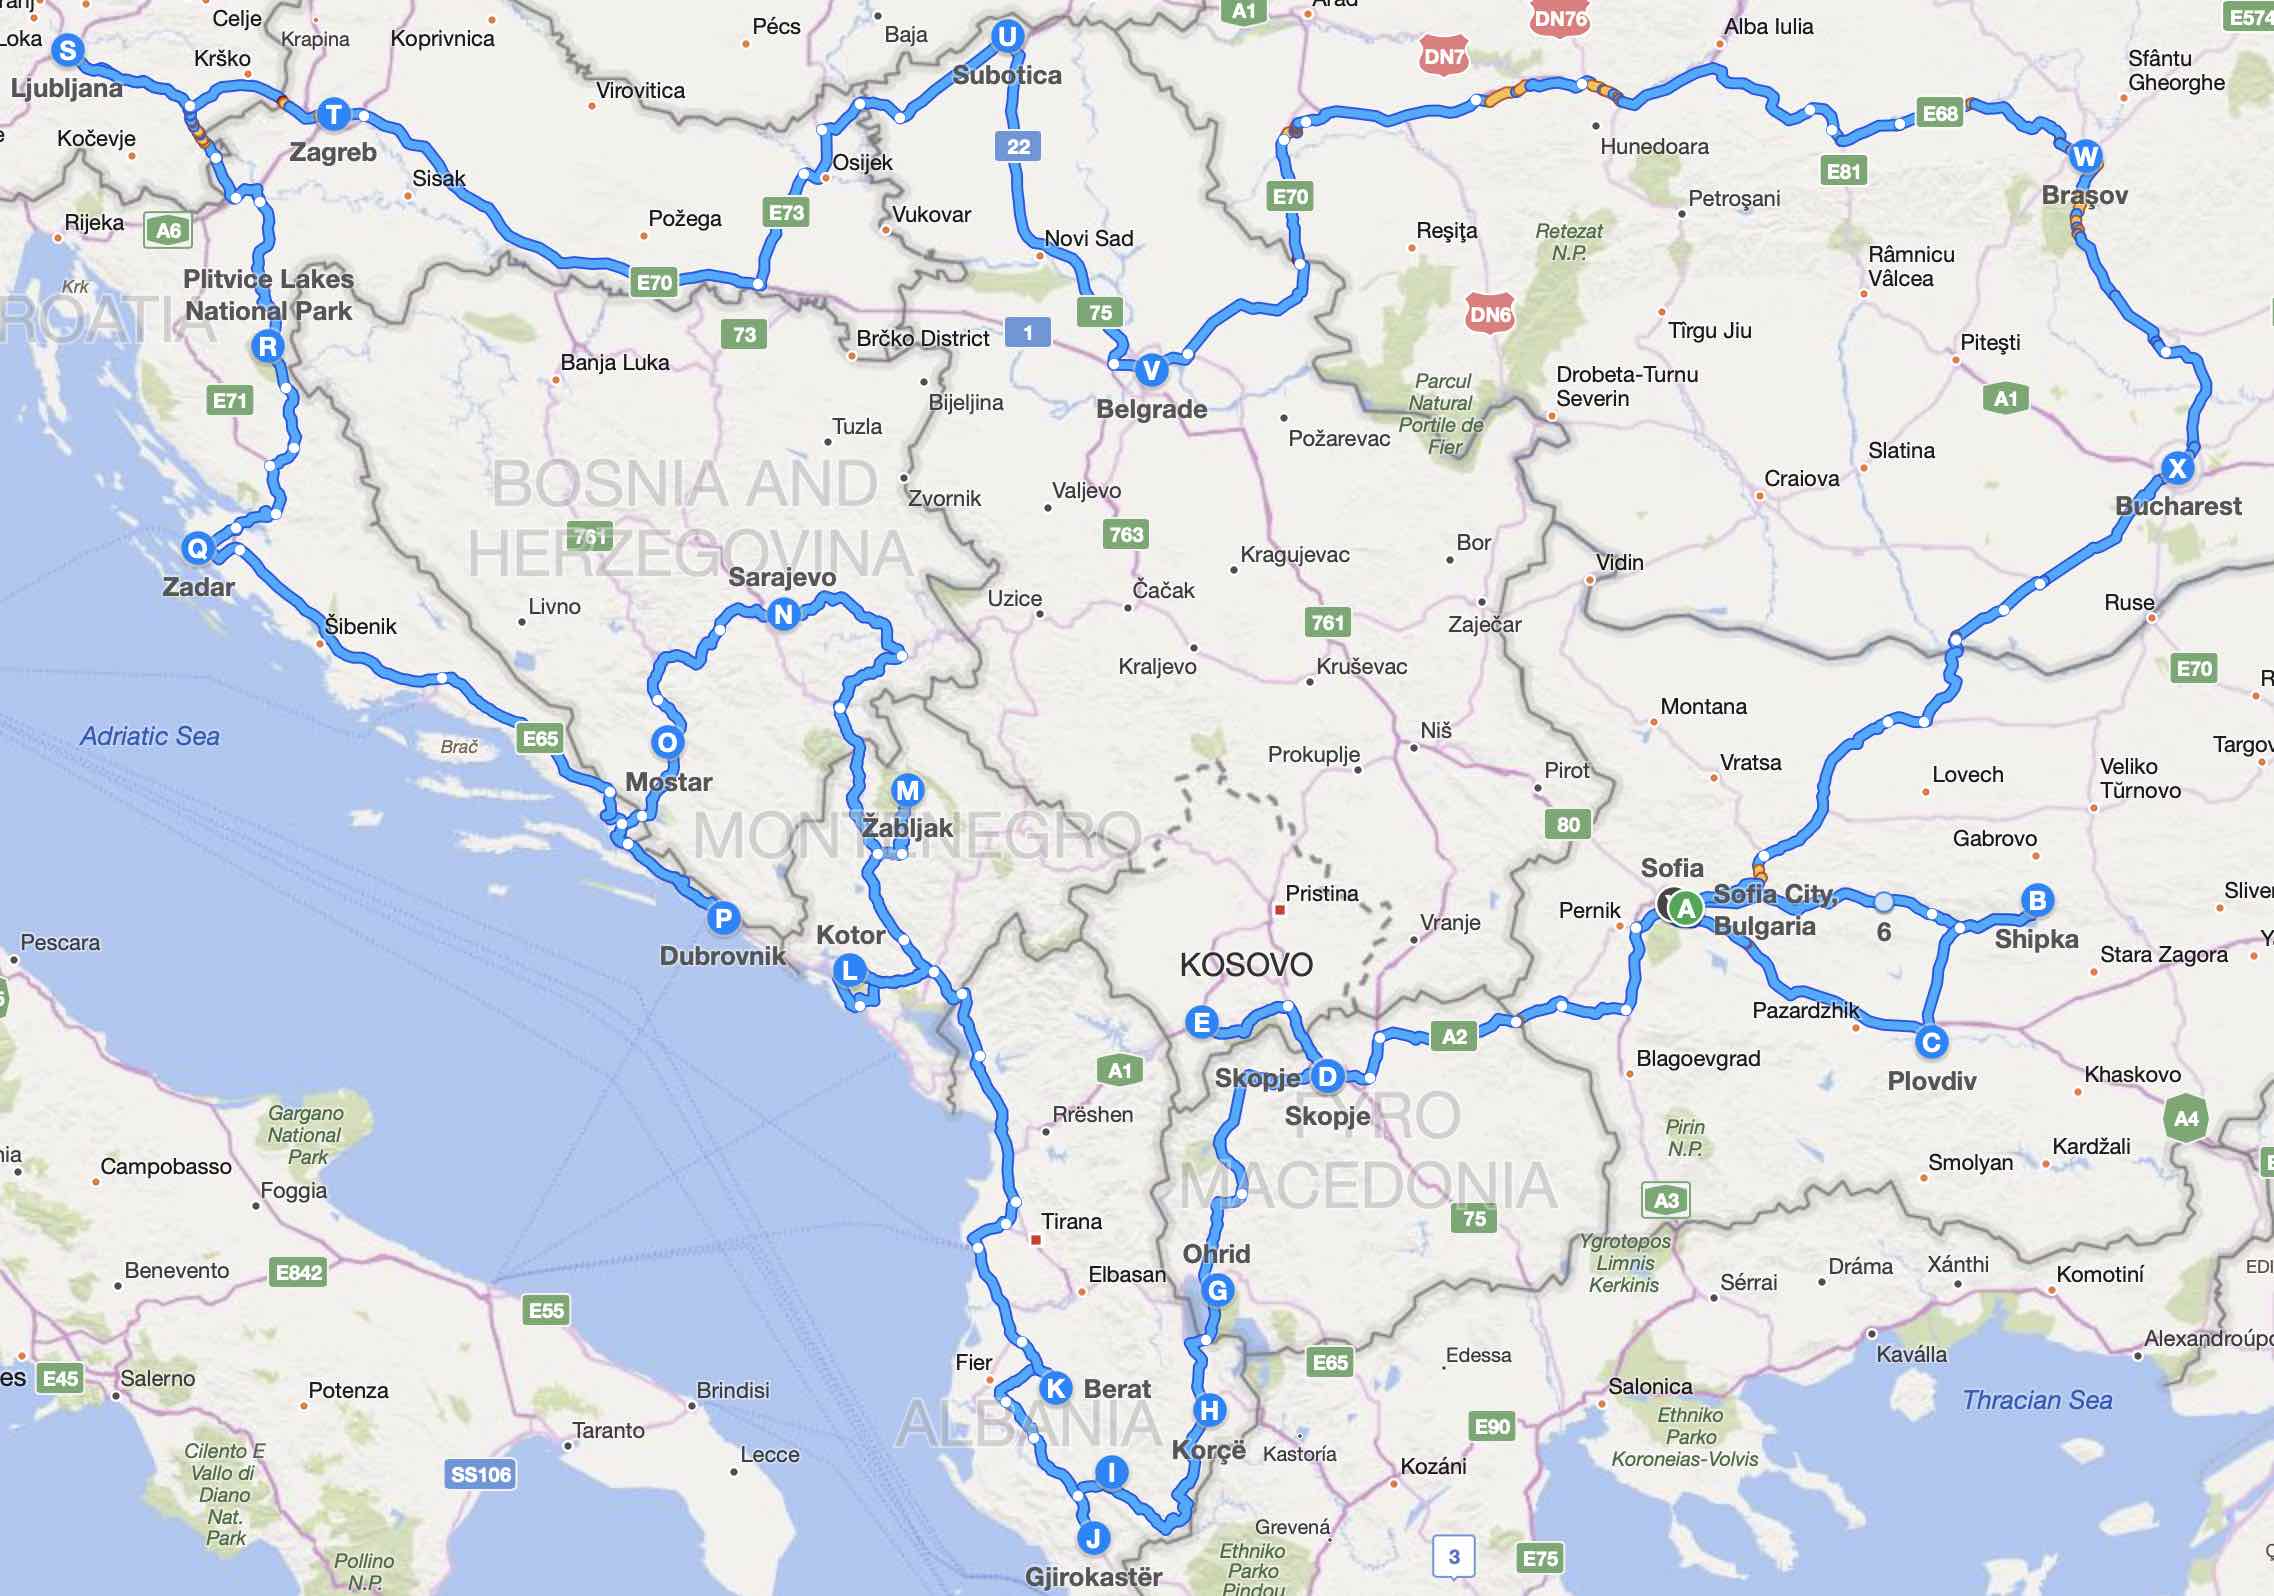 Balkans Roadtrip Route